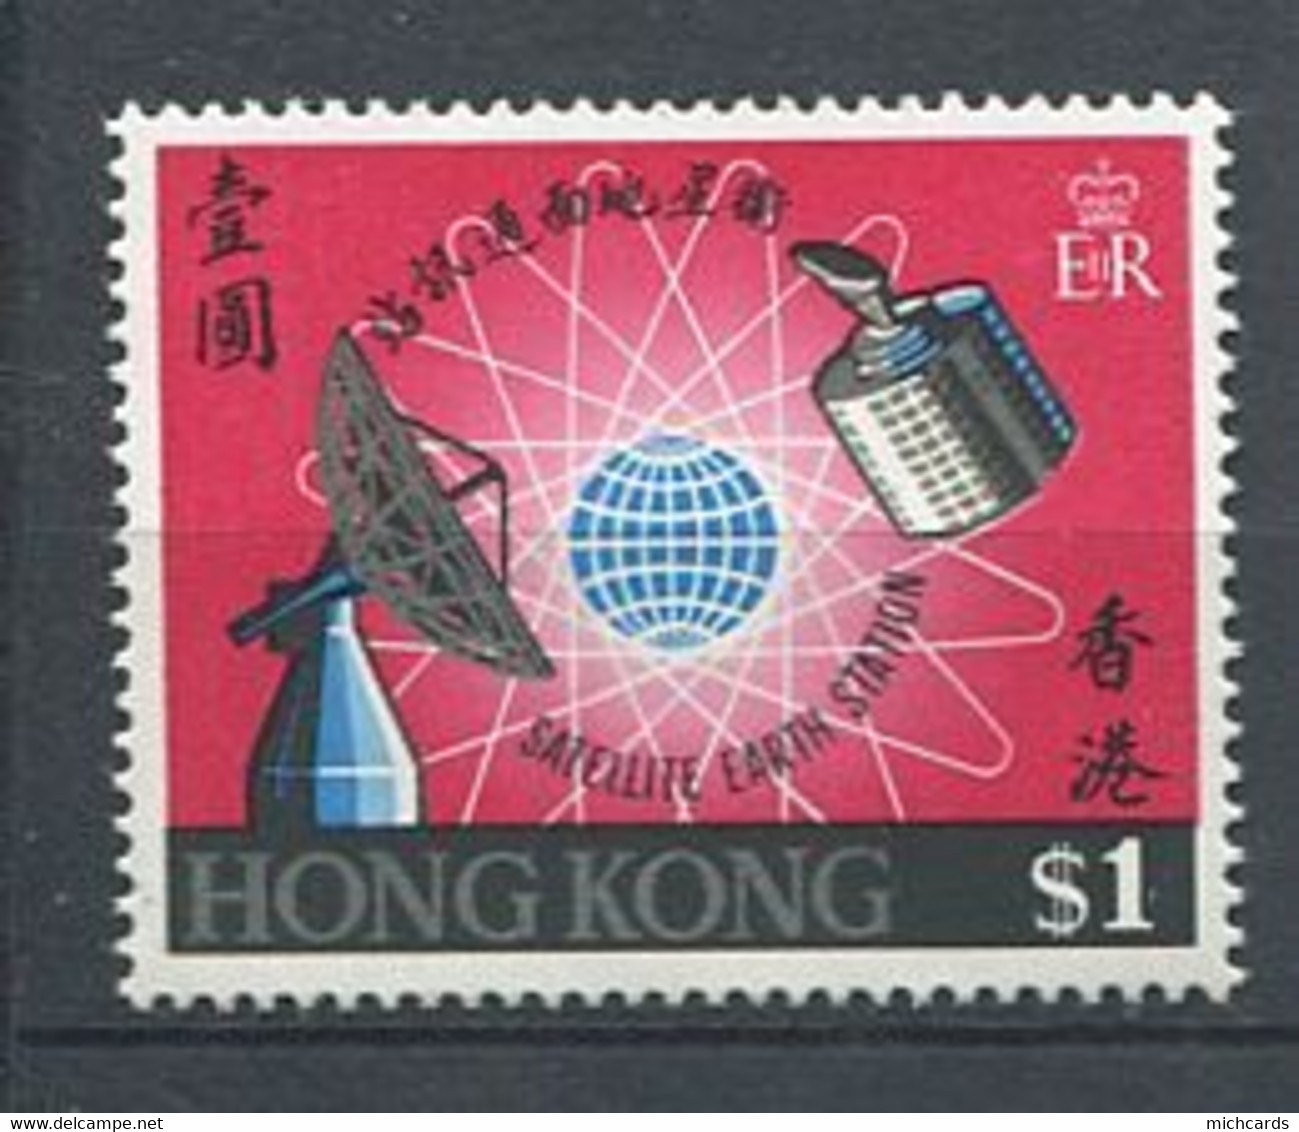 232 HONG KONG 1969 - Yvert 243 - Station Satellite Communication - Neuf ** (MNH) Sans Trace De Charniere - Unused Stamps